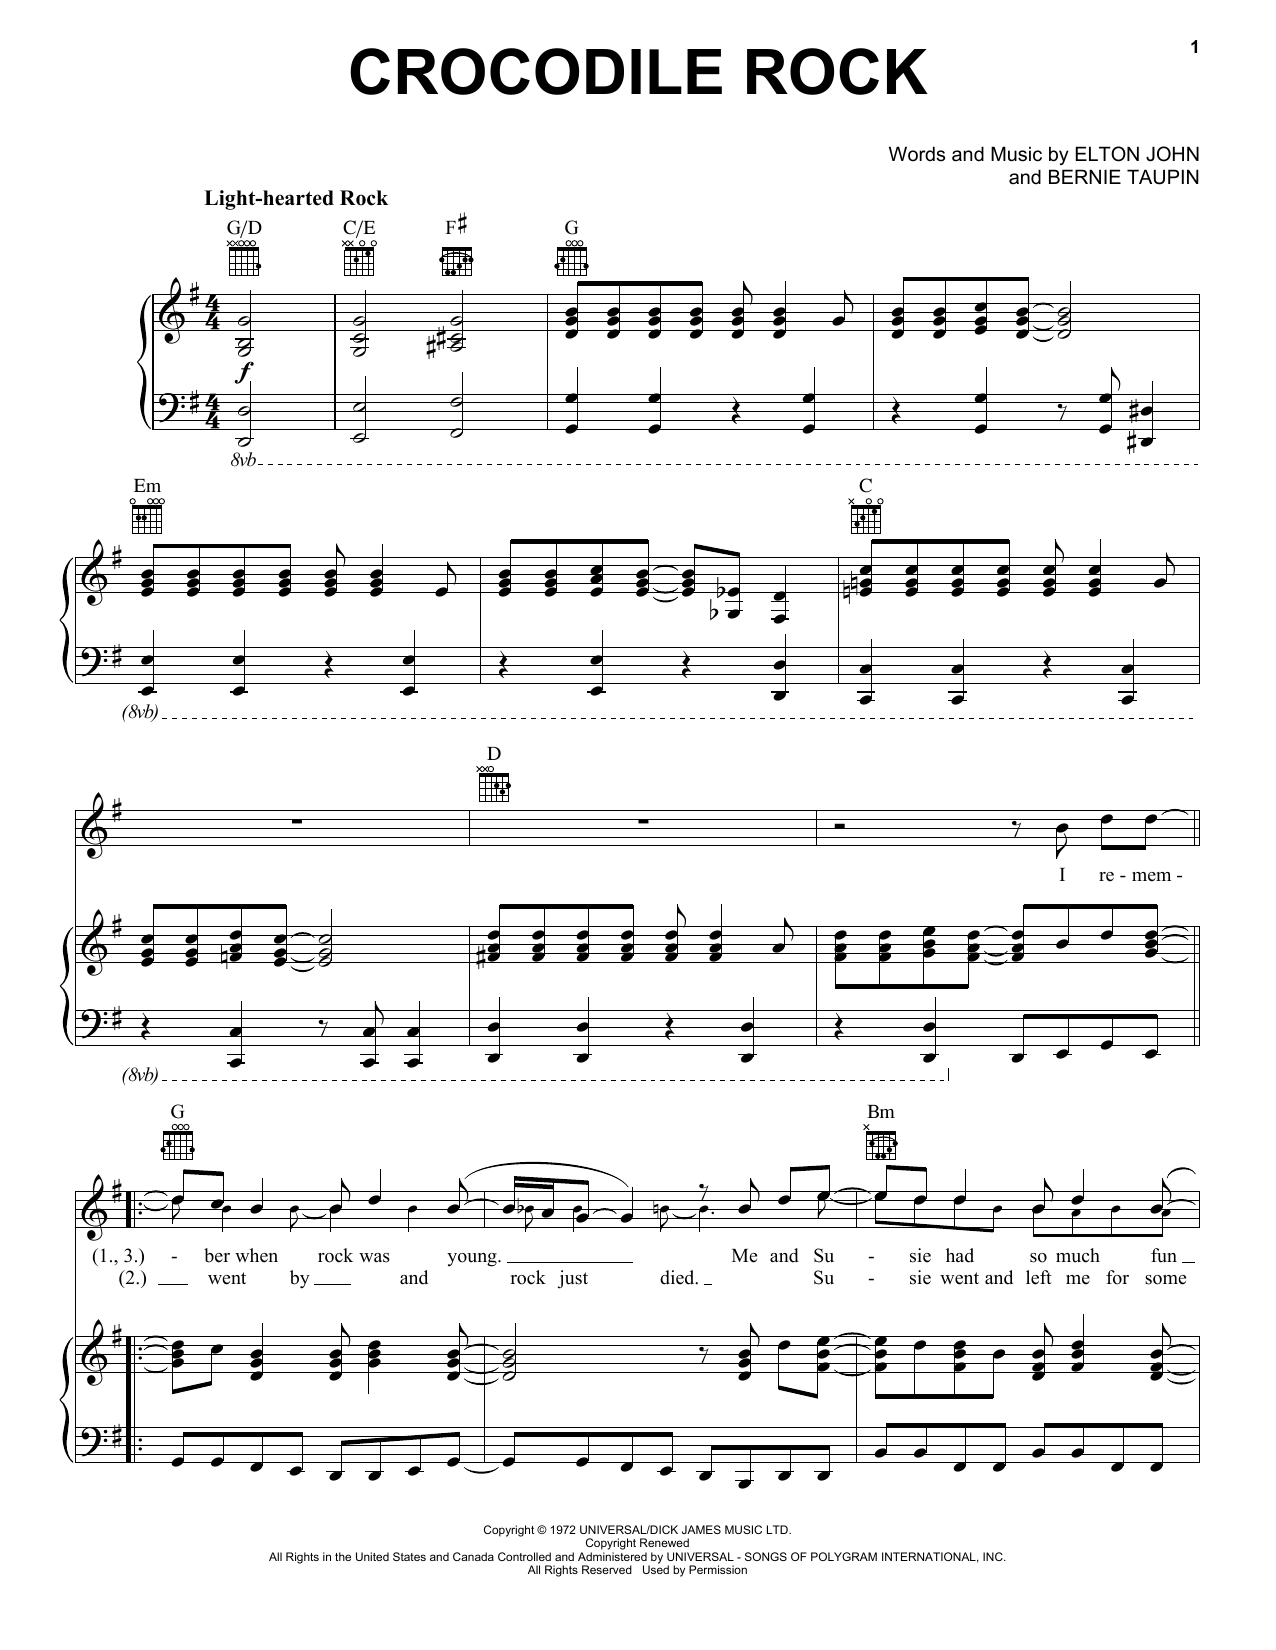 Download Elton John Crocodile Rock Sheet Music and learn how to play Keyboard PDF digital score in minutes